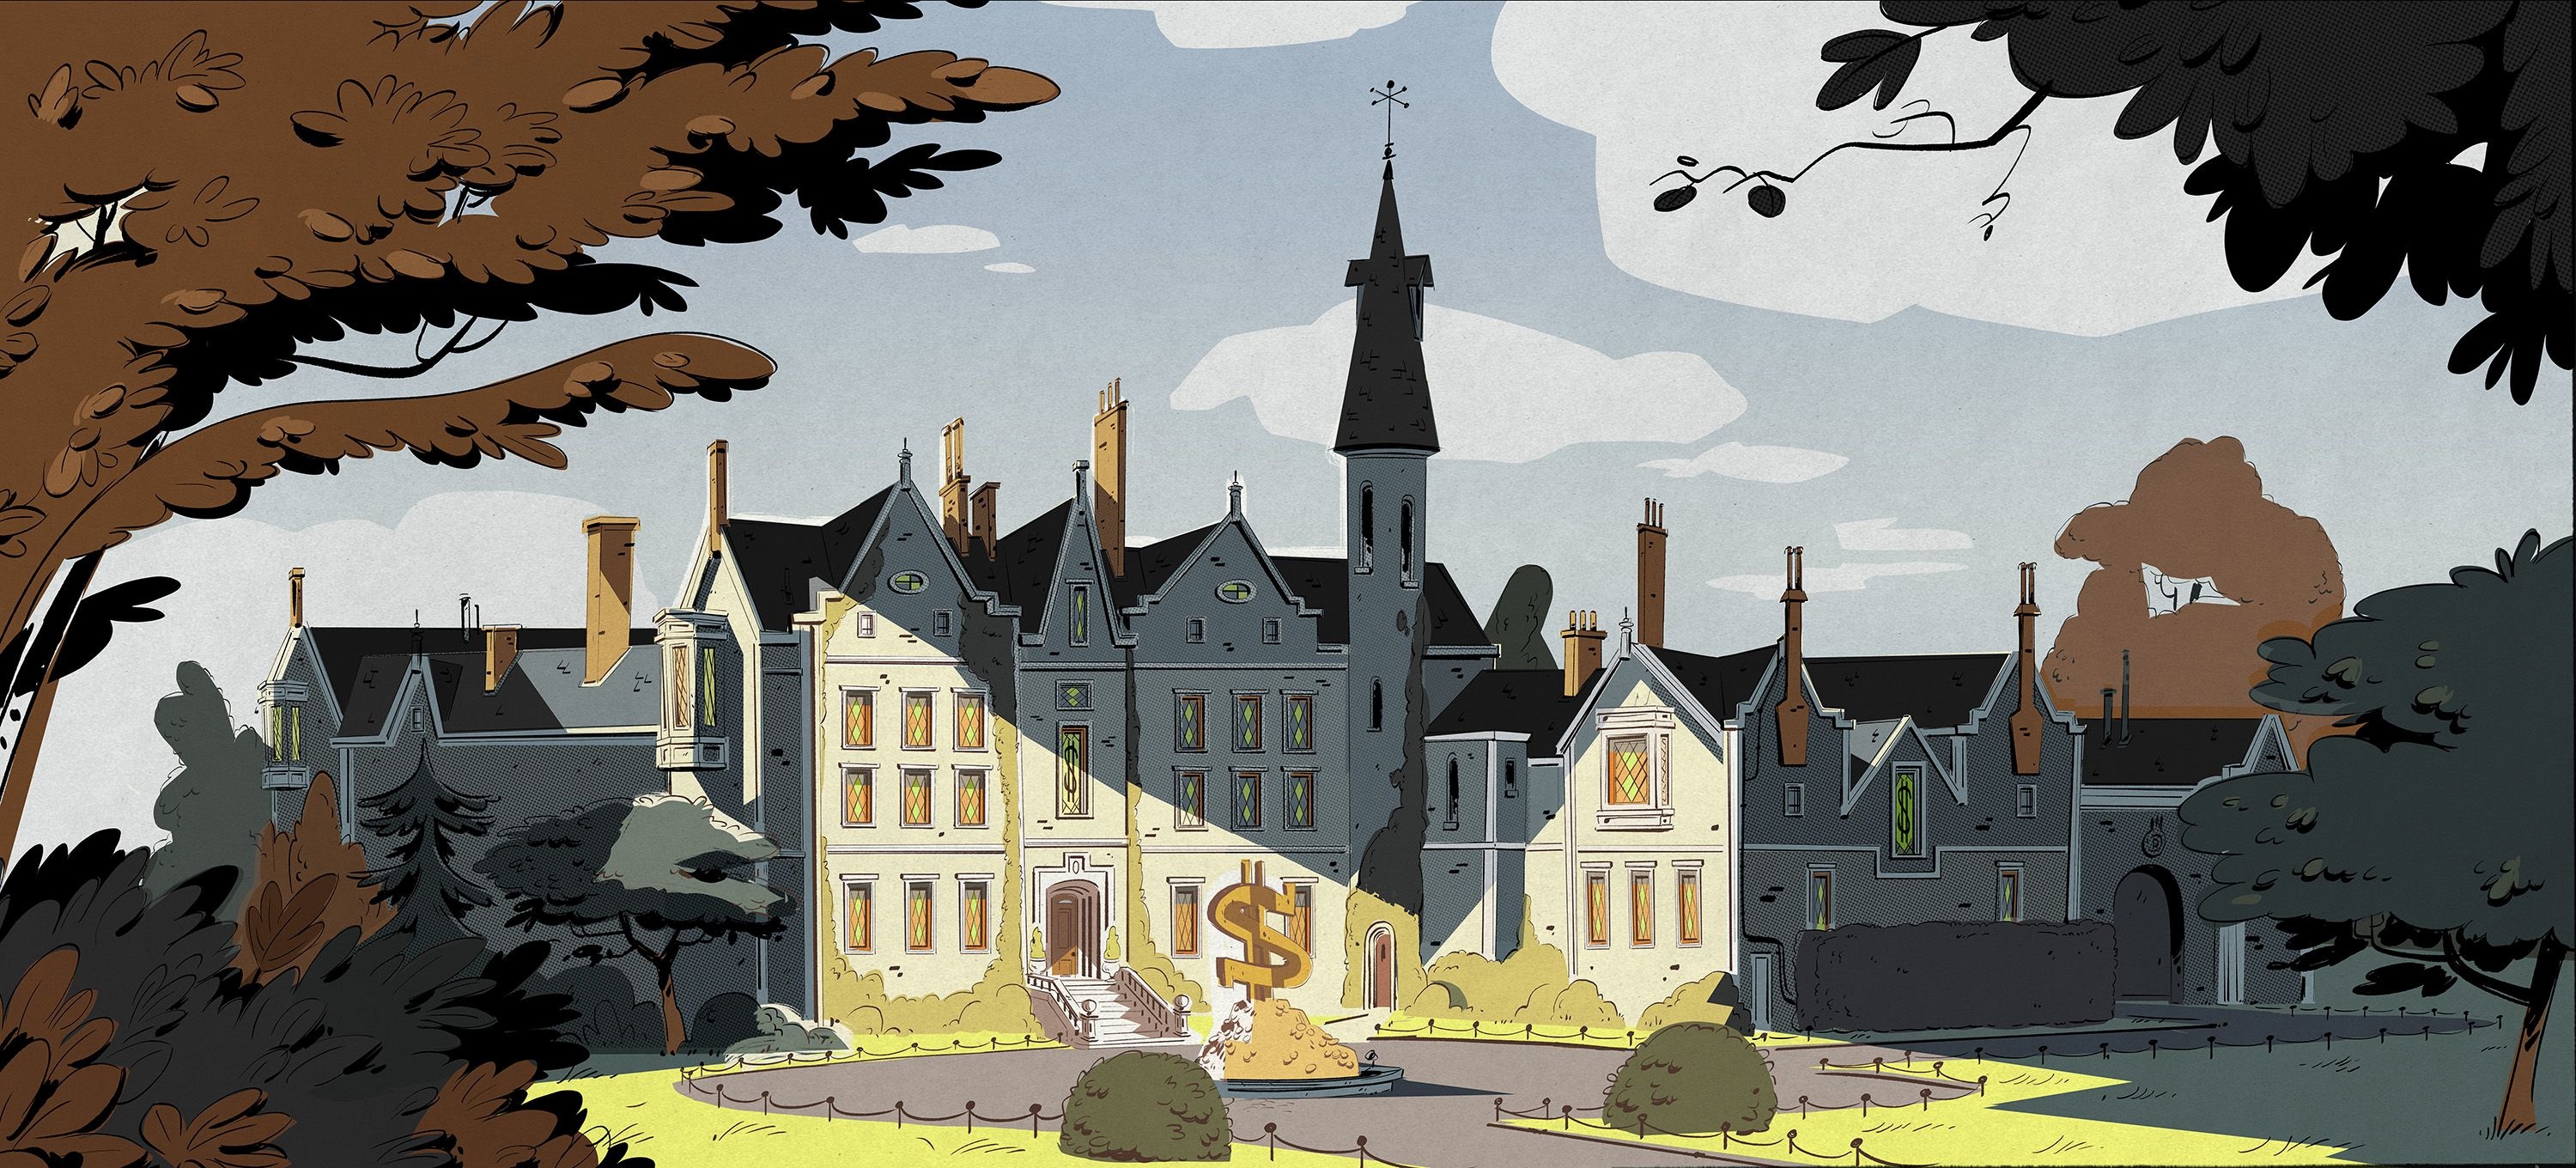 DuckTales Animation, Tech age, Silicon Valley, Cartoon background, 3000x1360 Dual Screen Desktop